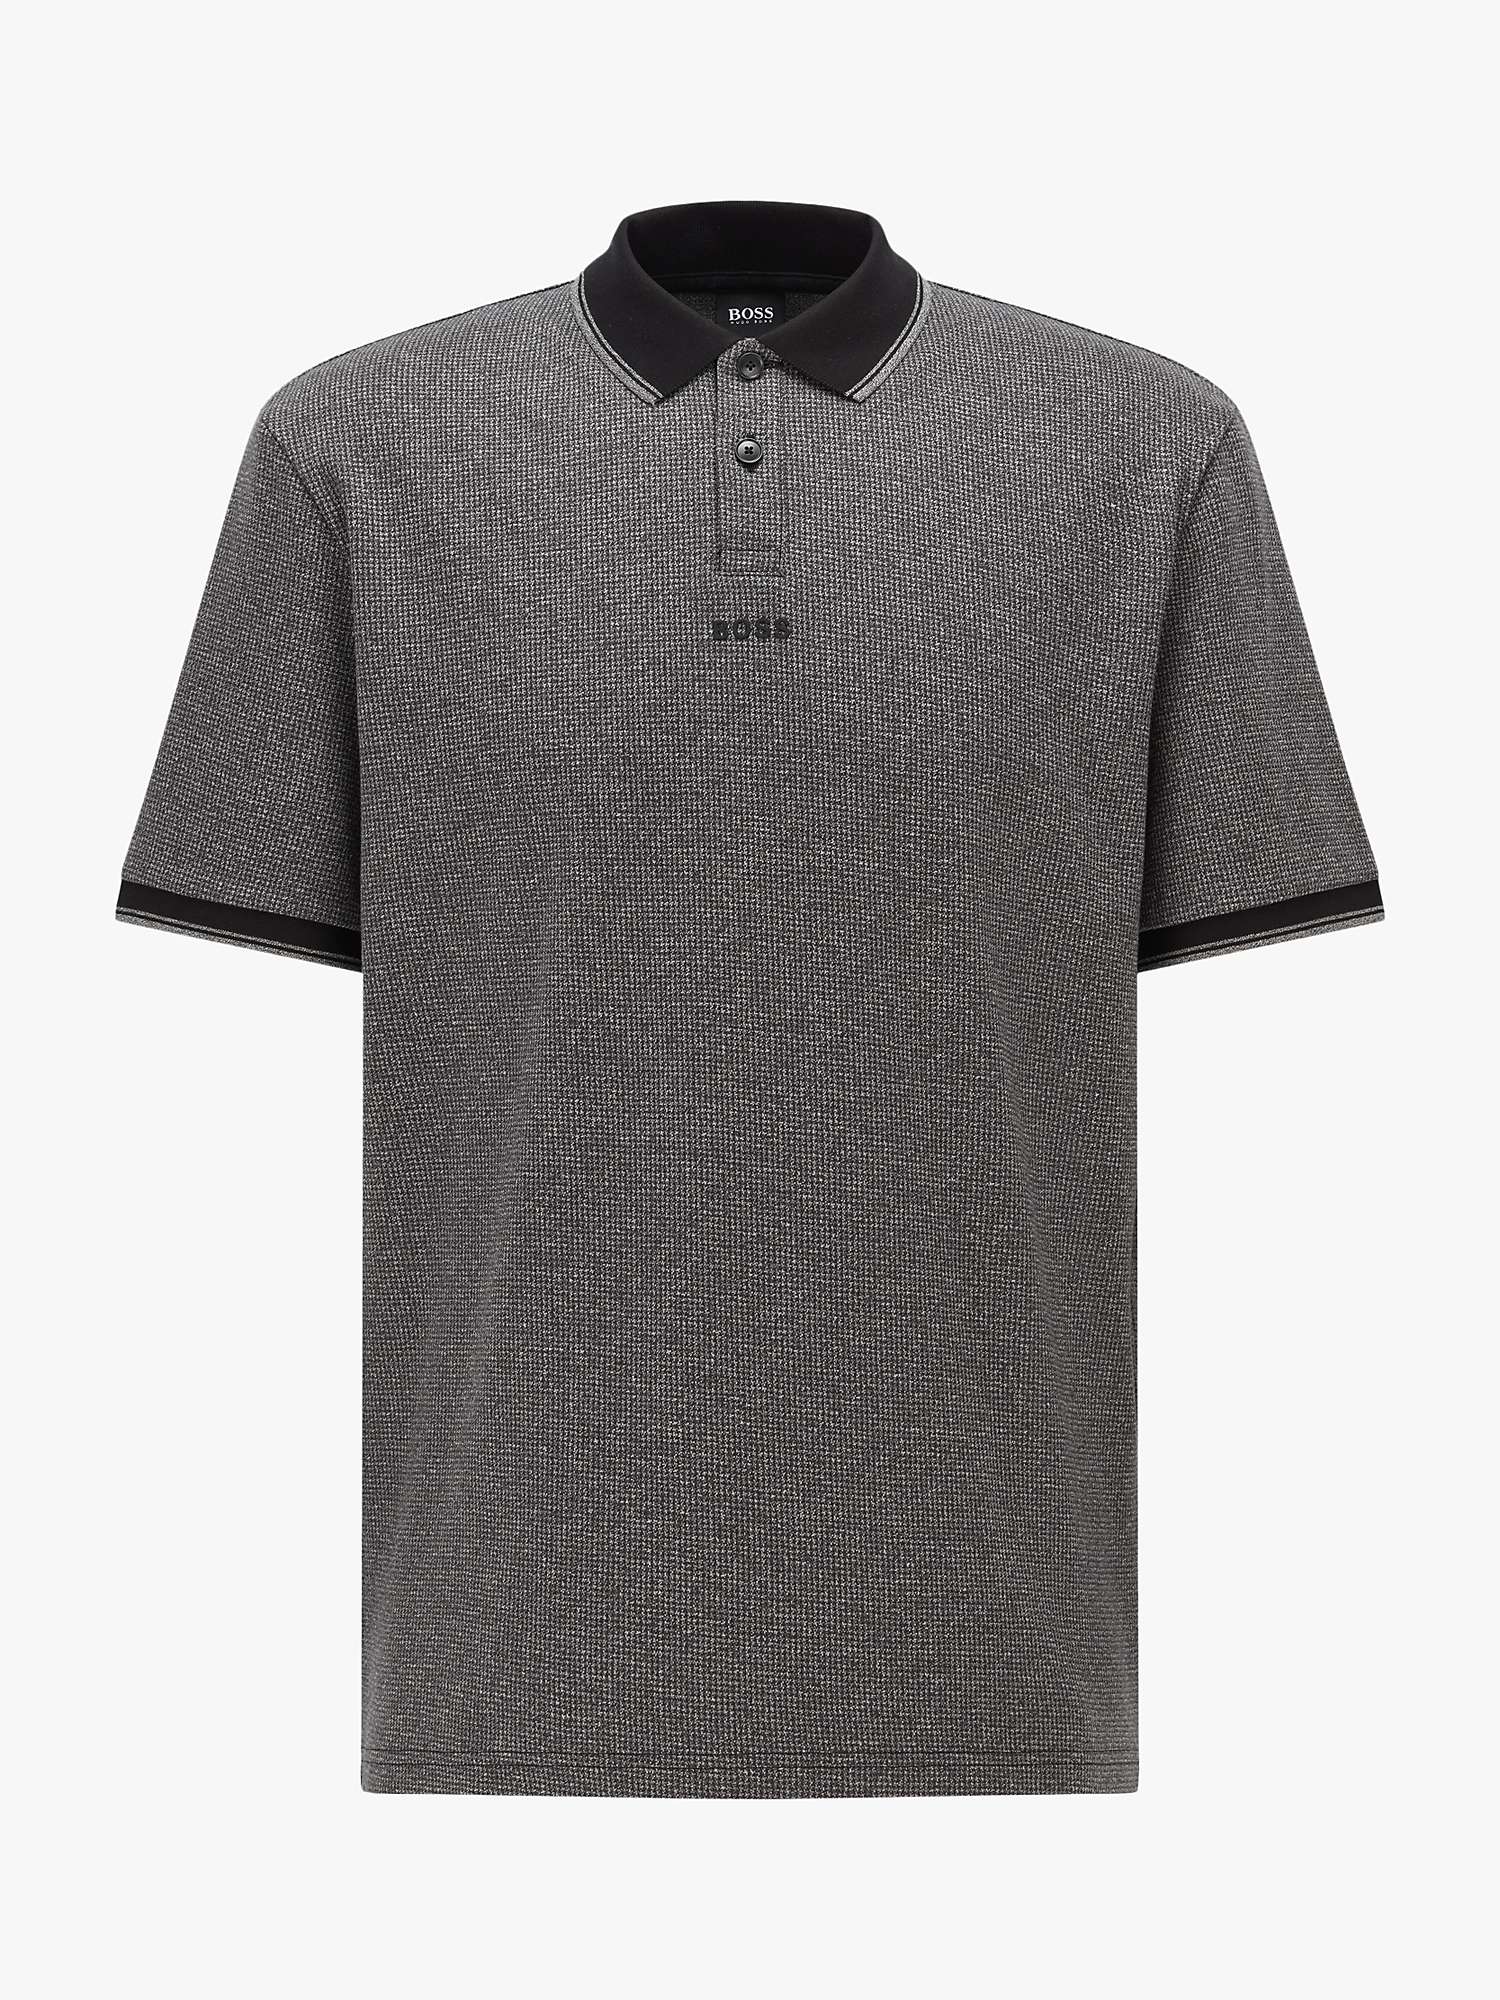 Buy BOSS Textured Pattern Short Sleeve Polo Shirt, Black Online at johnlewis.com